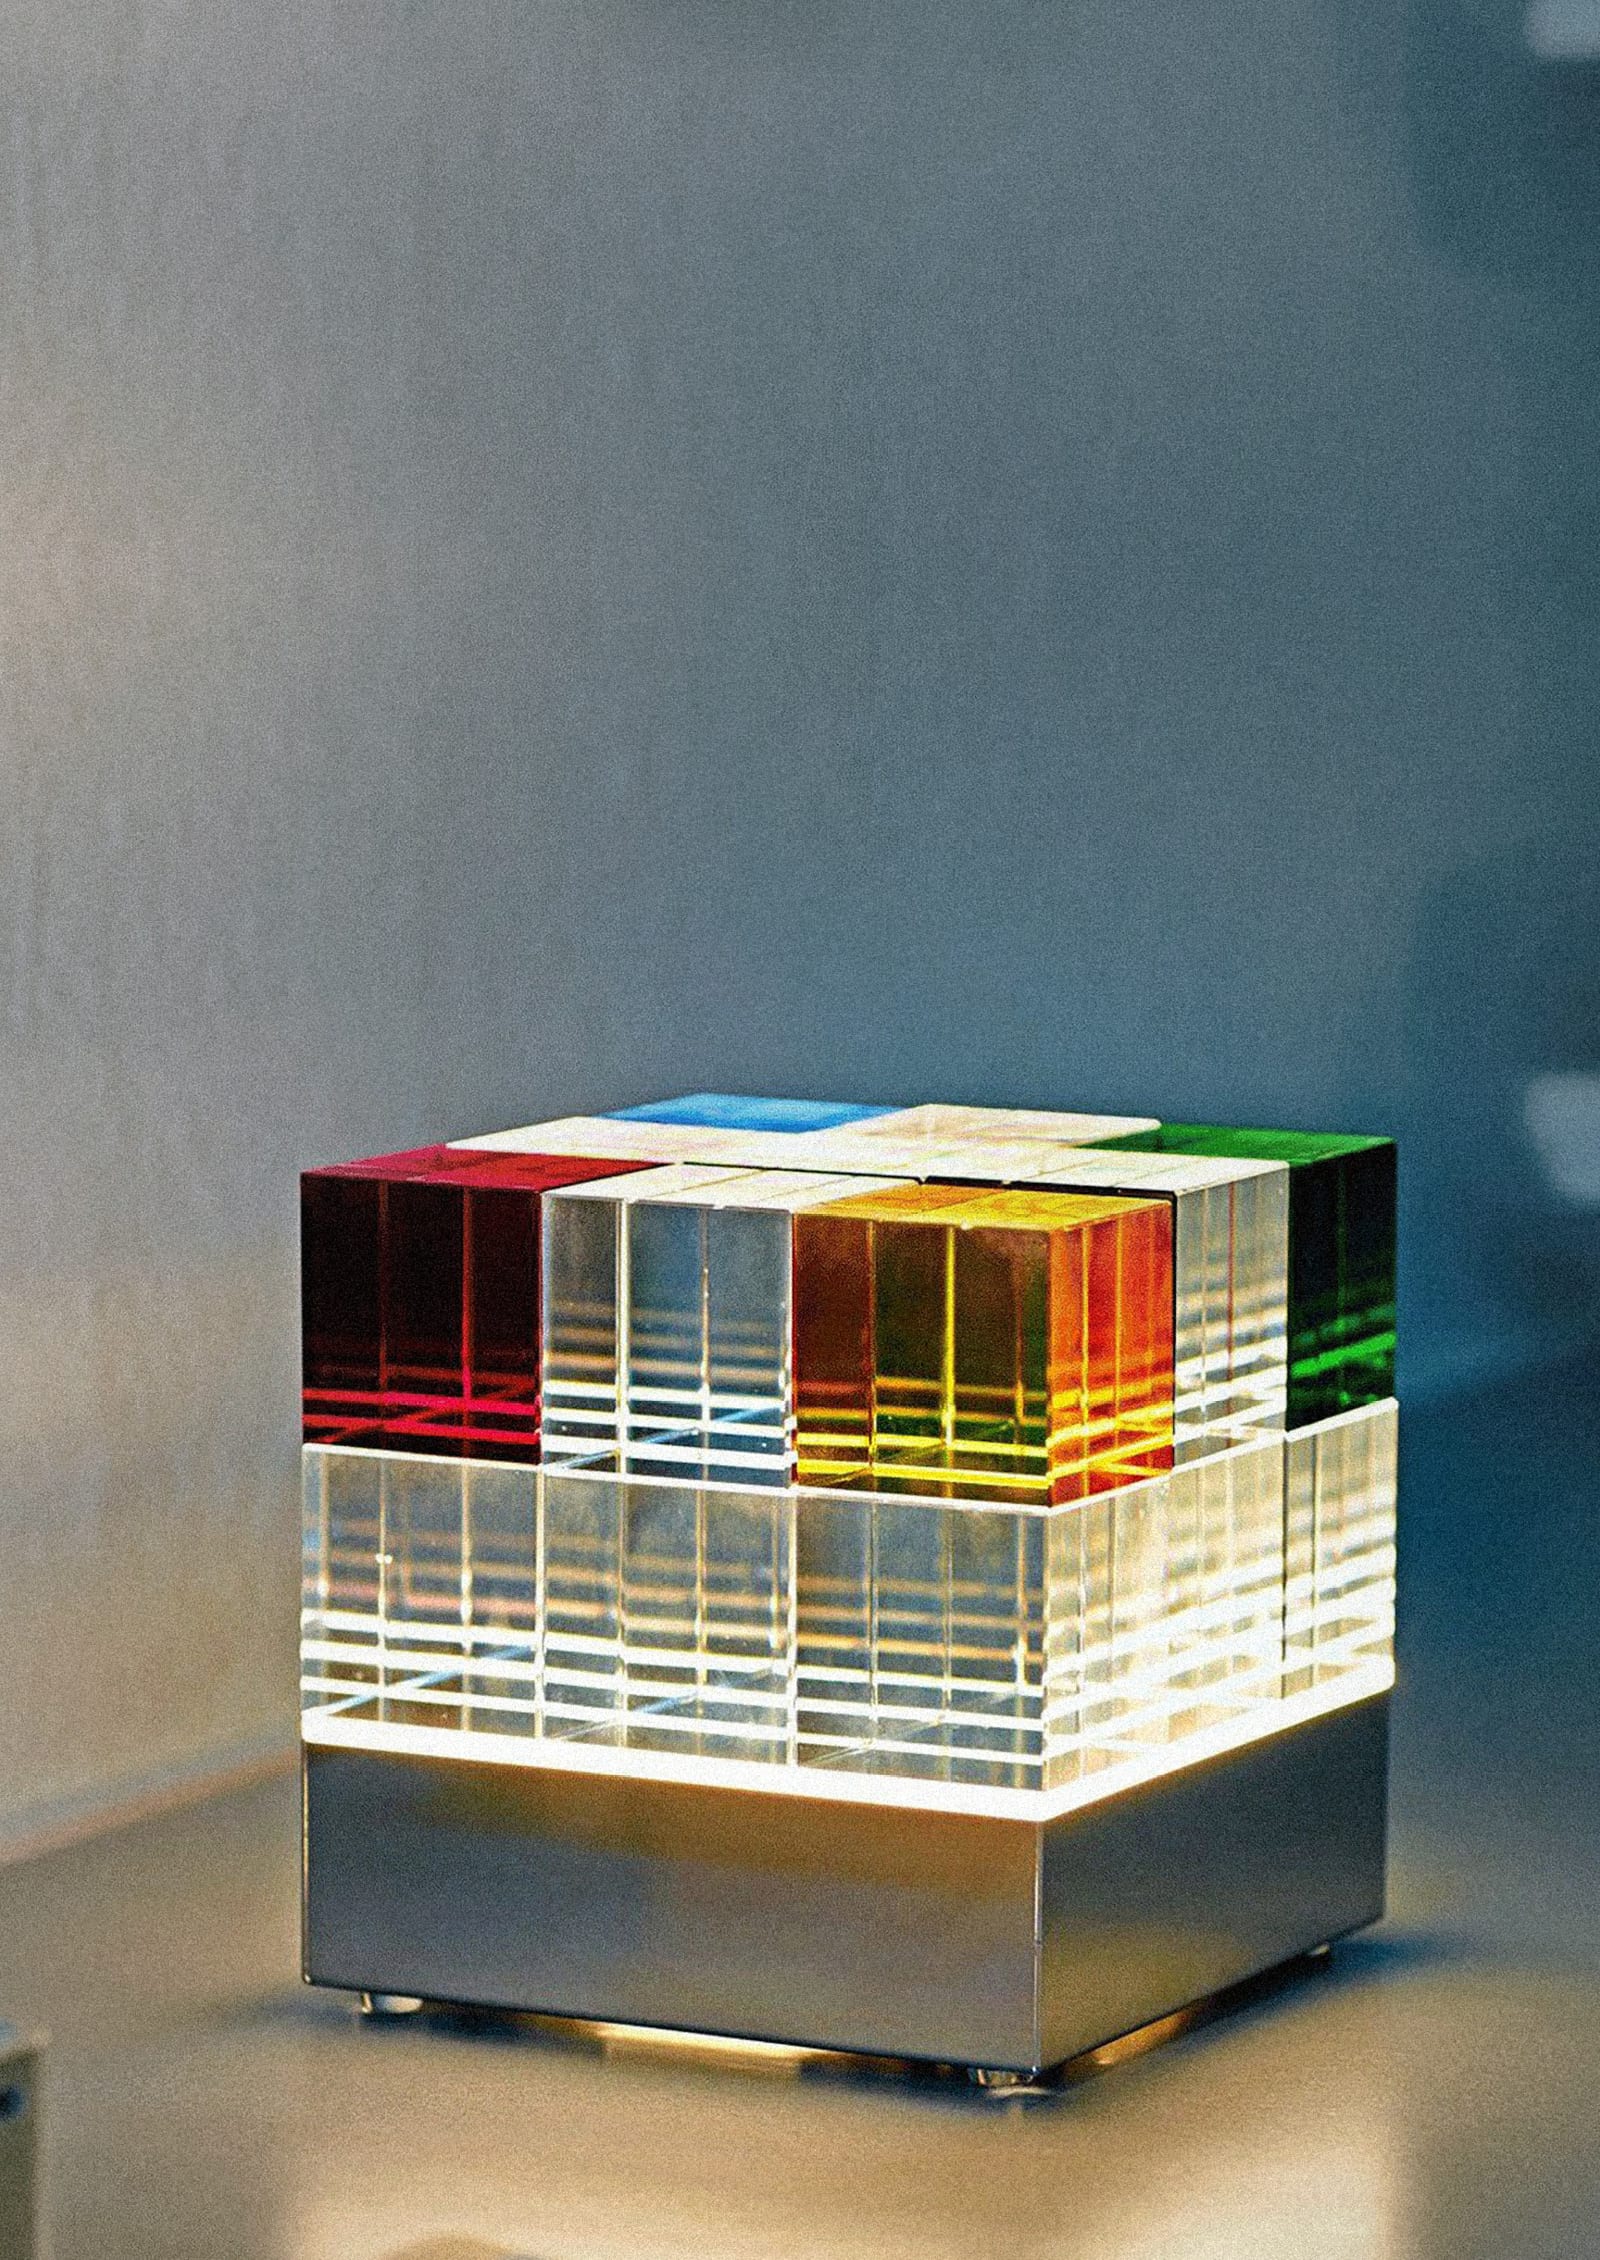 Cubelight